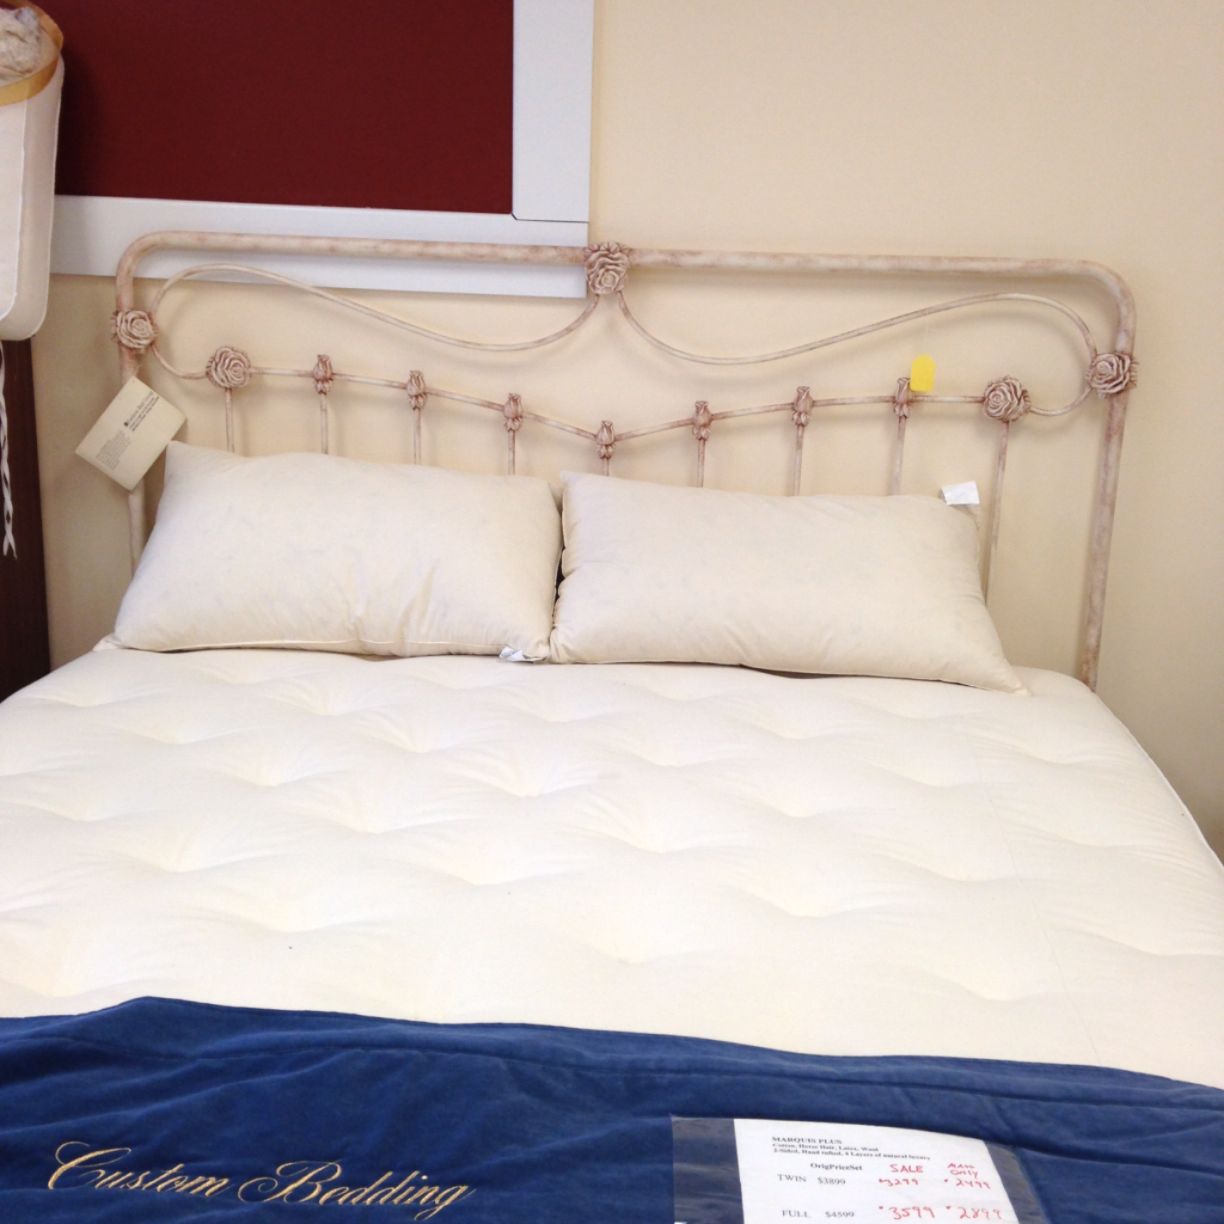 Orange Mattress - Custom Bedding Photo